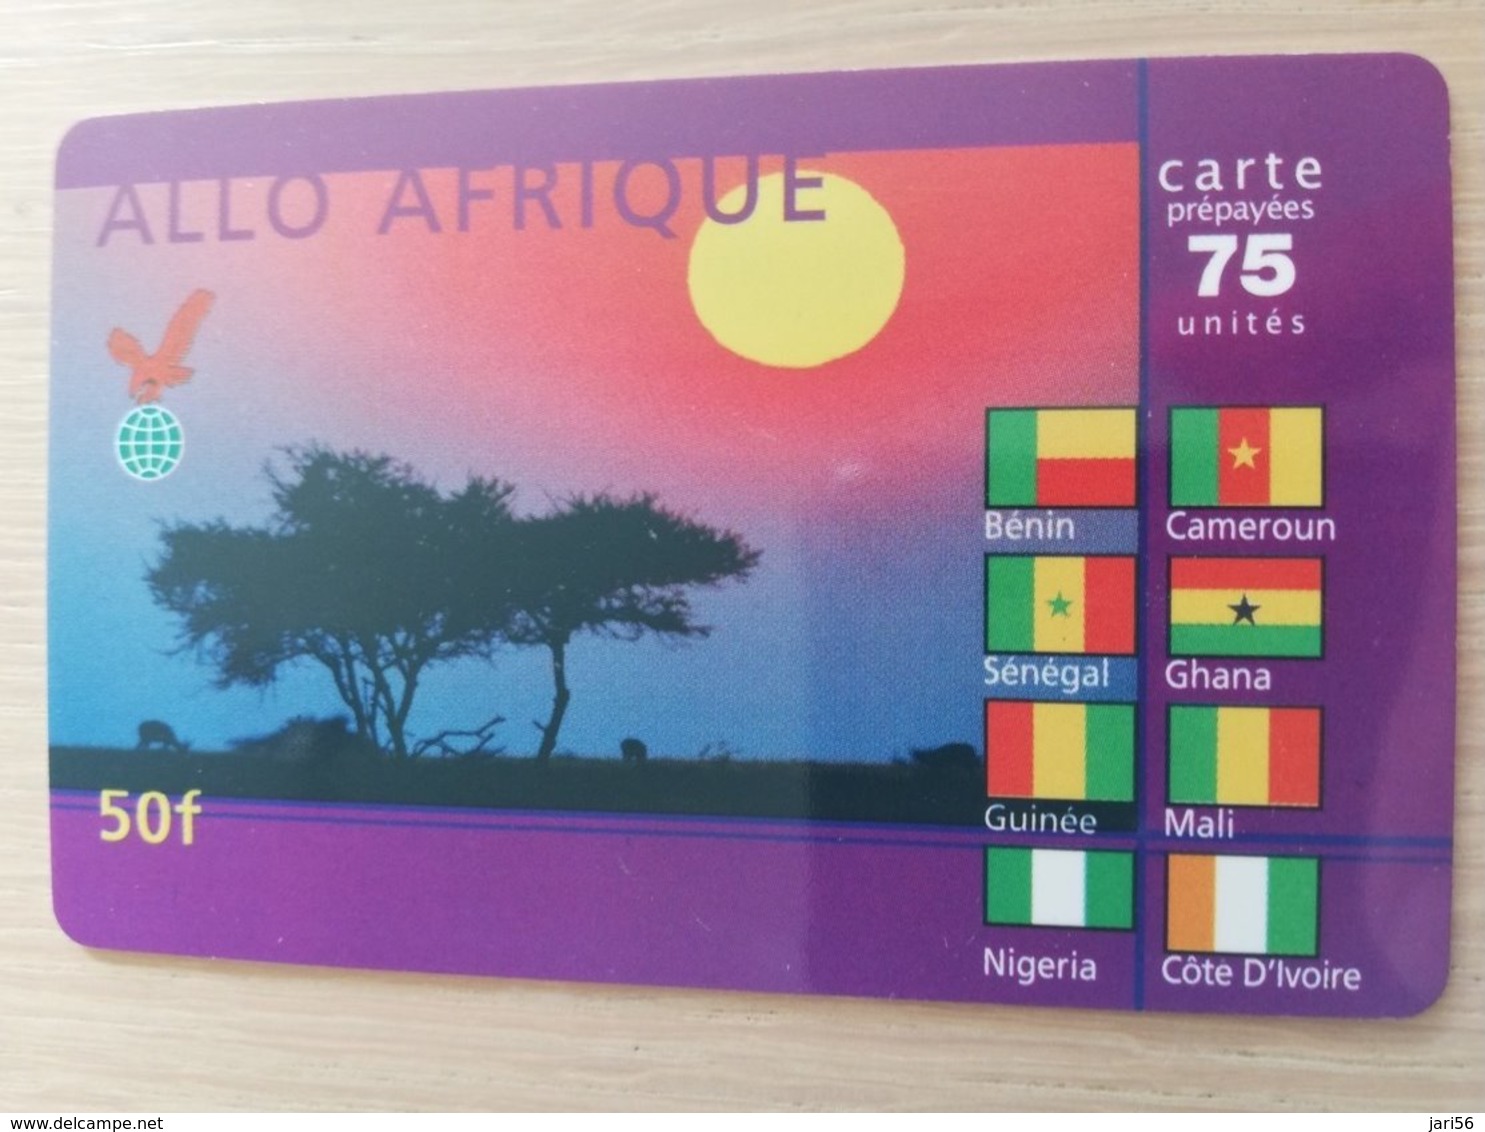 FRANCE/FRANKRIJK  ALLO   AFRICA  75 UNITS PREPAID  USED    ** 1509** - Prepaid: Mobicartes